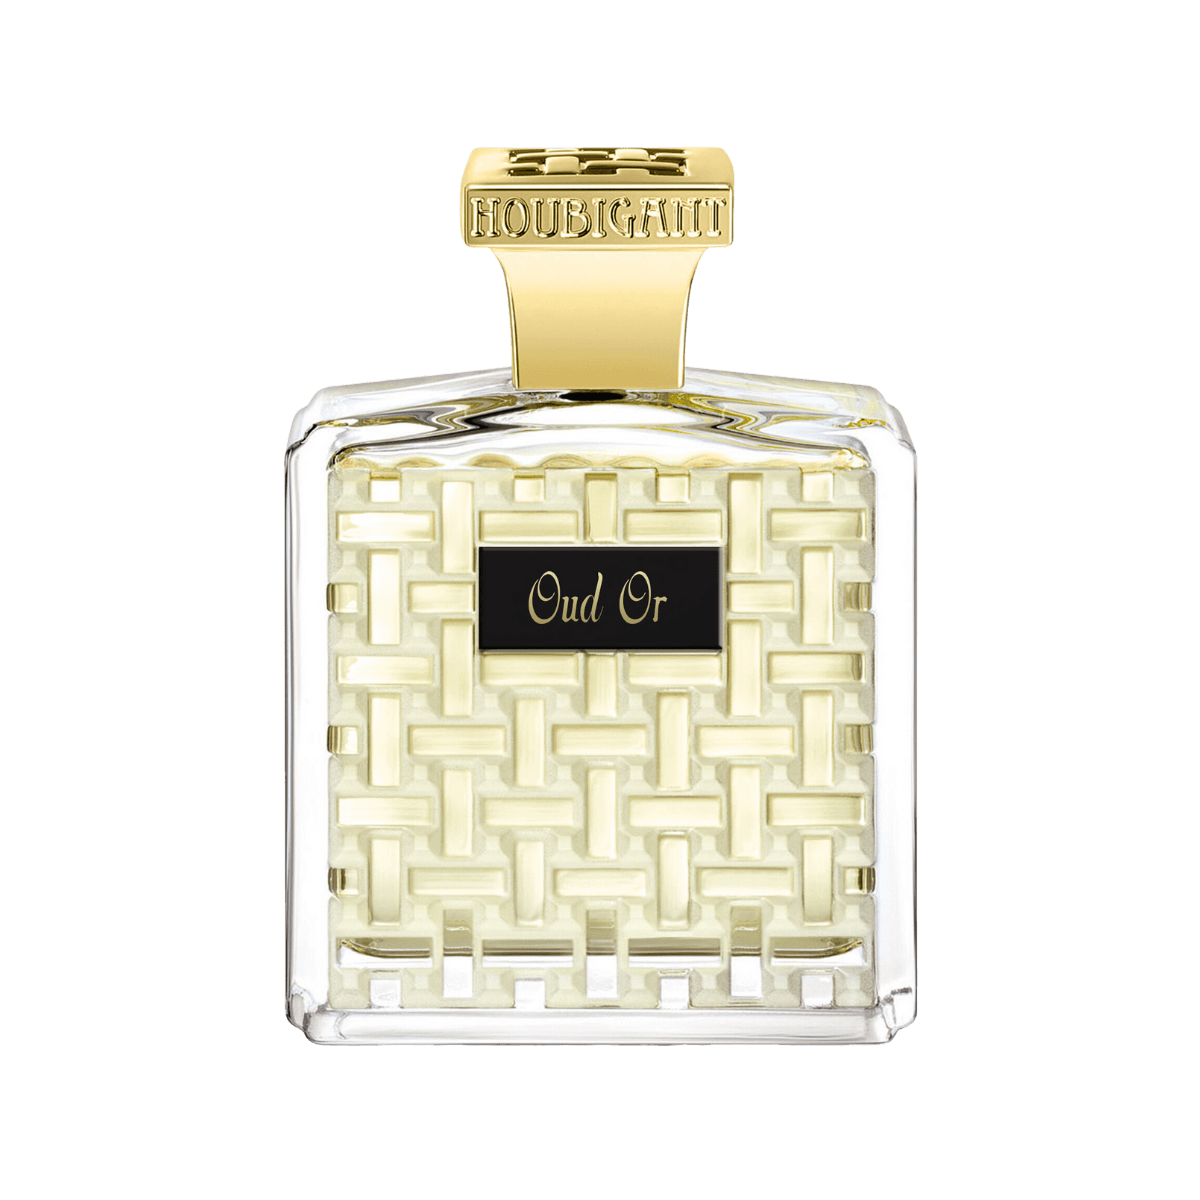 Image of Oud or Eau eau de parfum by the perfume brand Houbigant